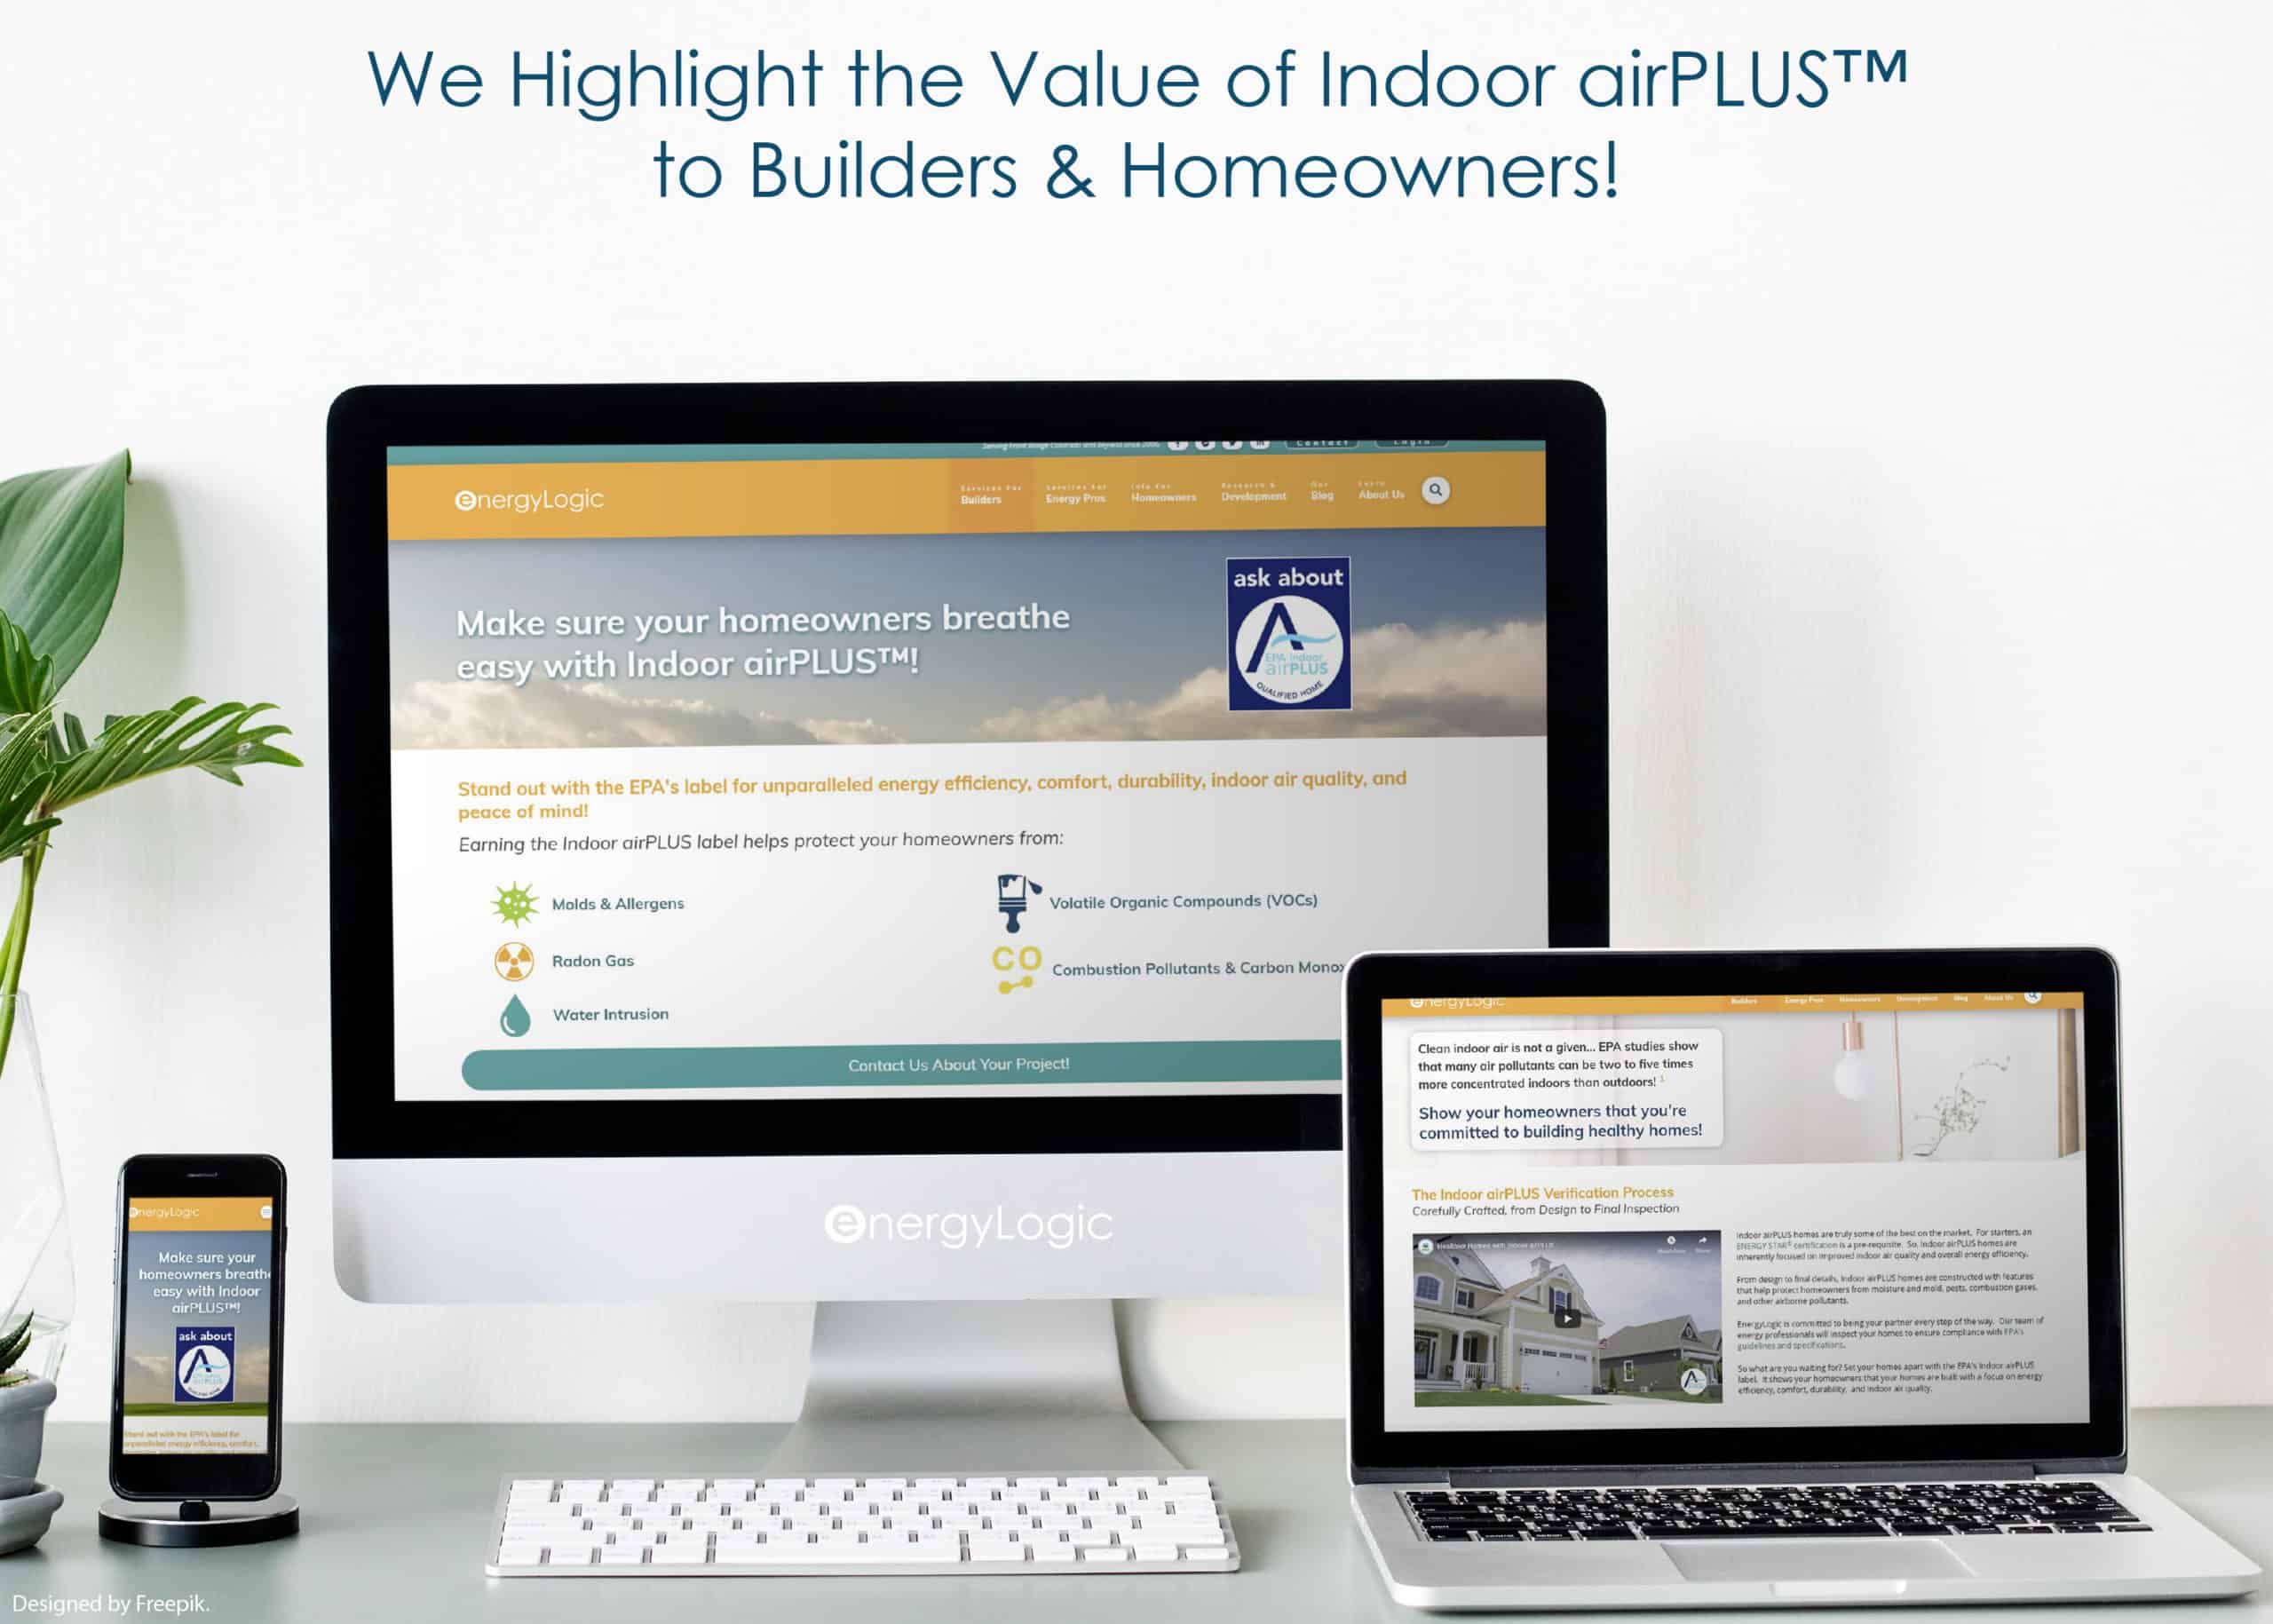 Indoor airPLUS 2020 Web Presence Example Image